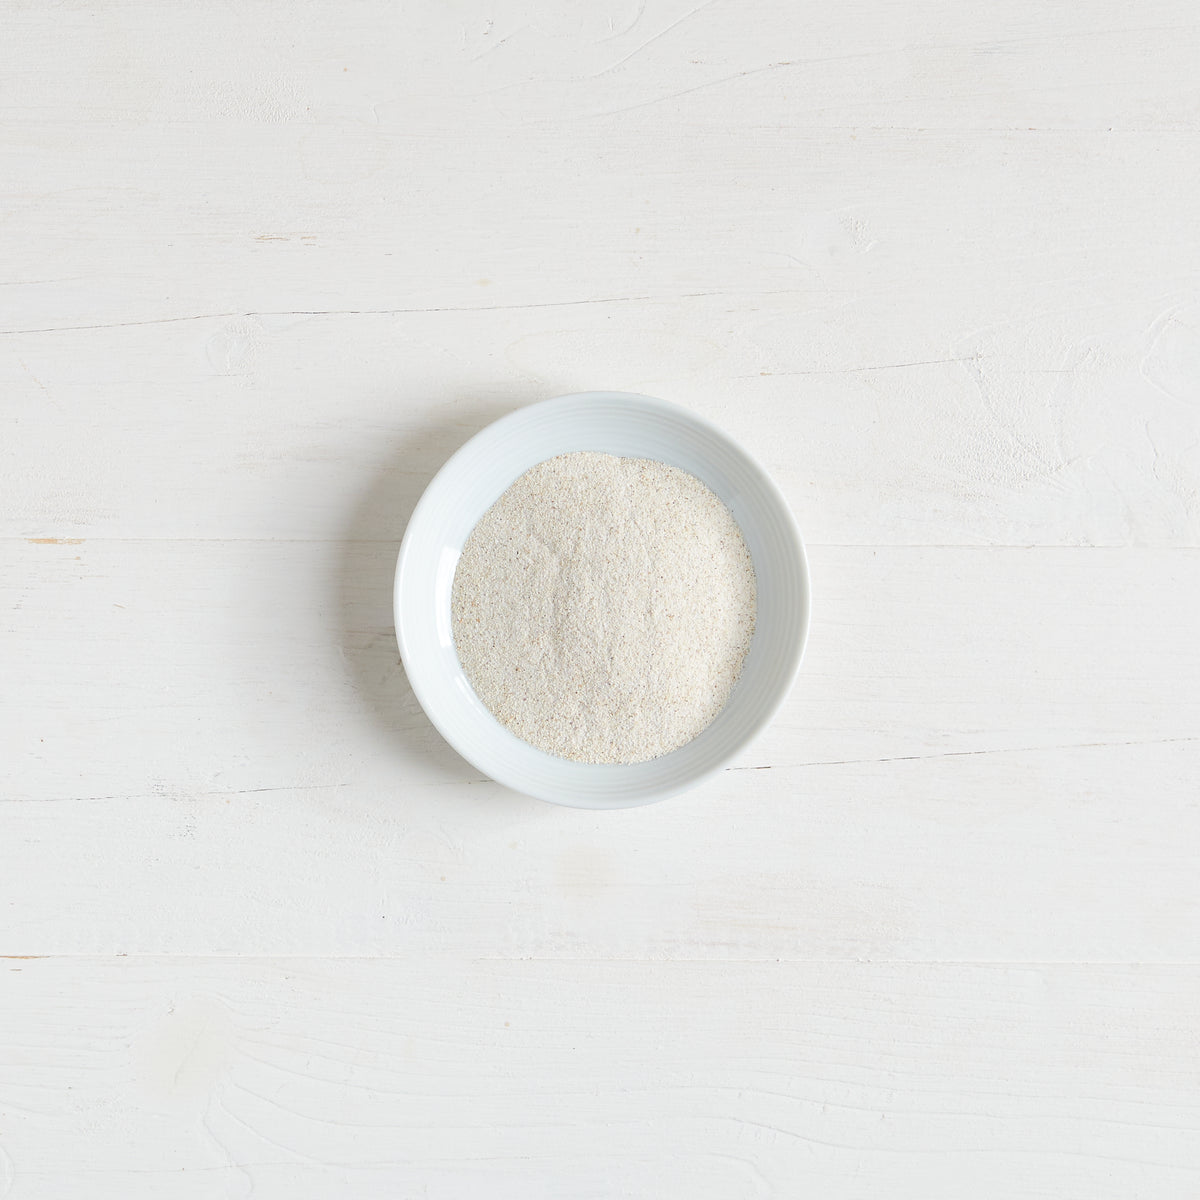 Clearspring Organic Gluten Free Buckwheat Flour